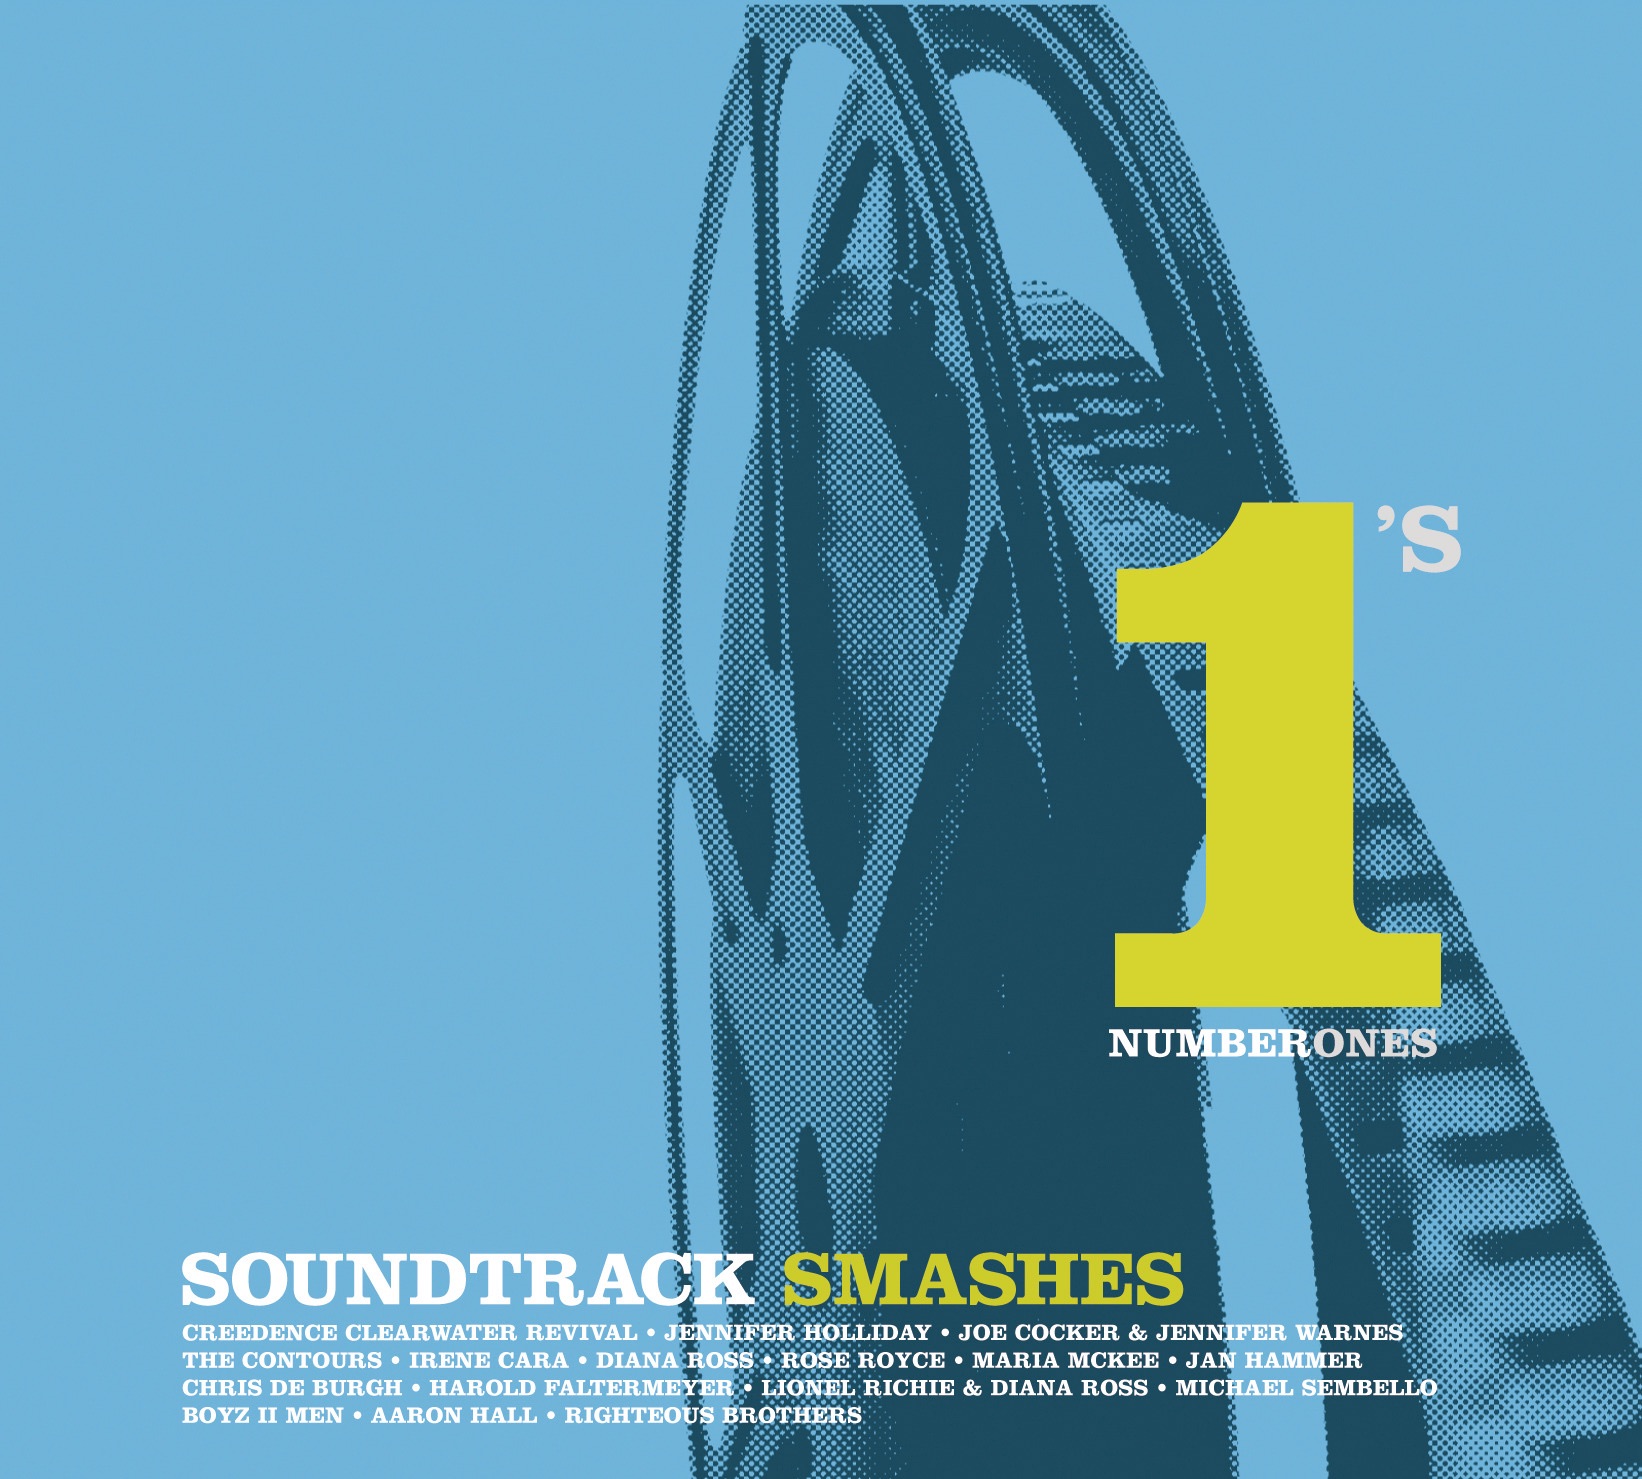 Smash soundtrack. Jan Hammer - Crocketts Theme обложка альбома. Harold Faltermeyer Axel f. Jennifer Warnes up where we belong.